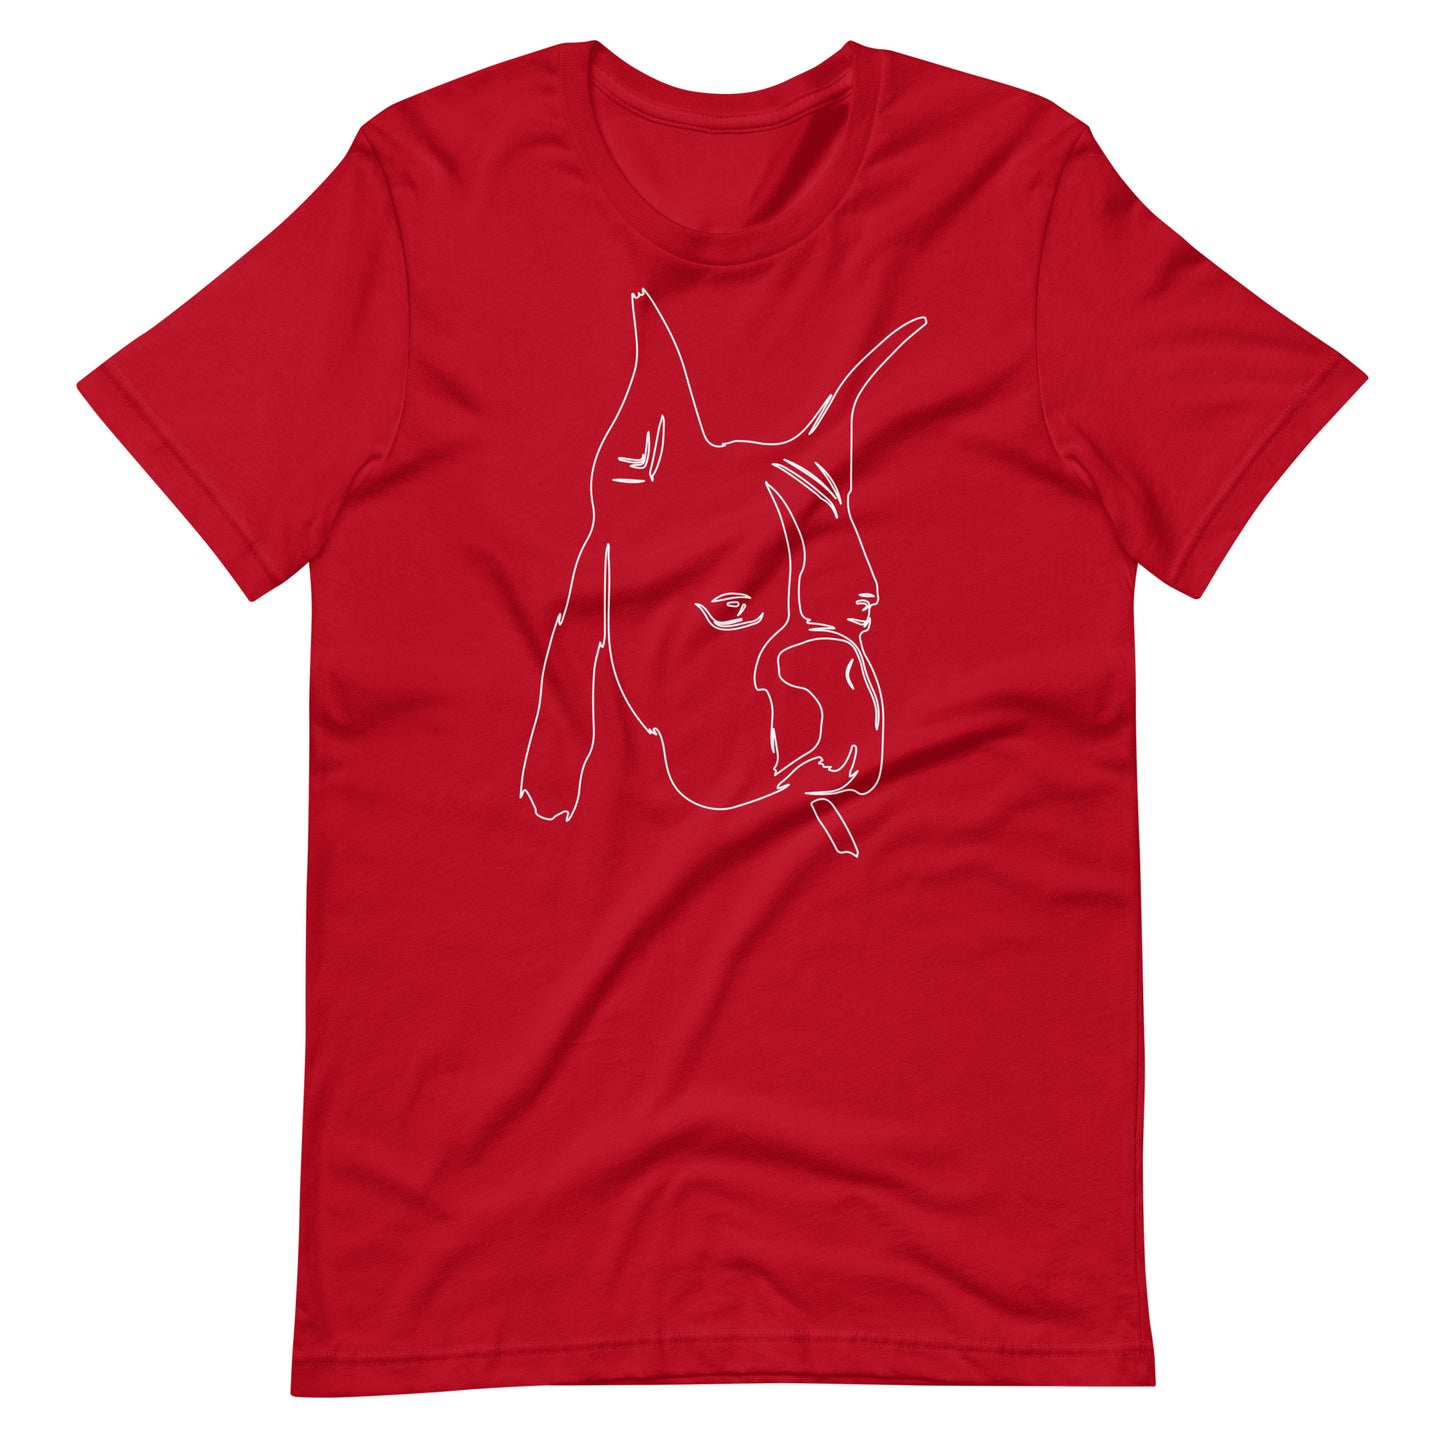 White line Boxer face on unisex red t-shirt